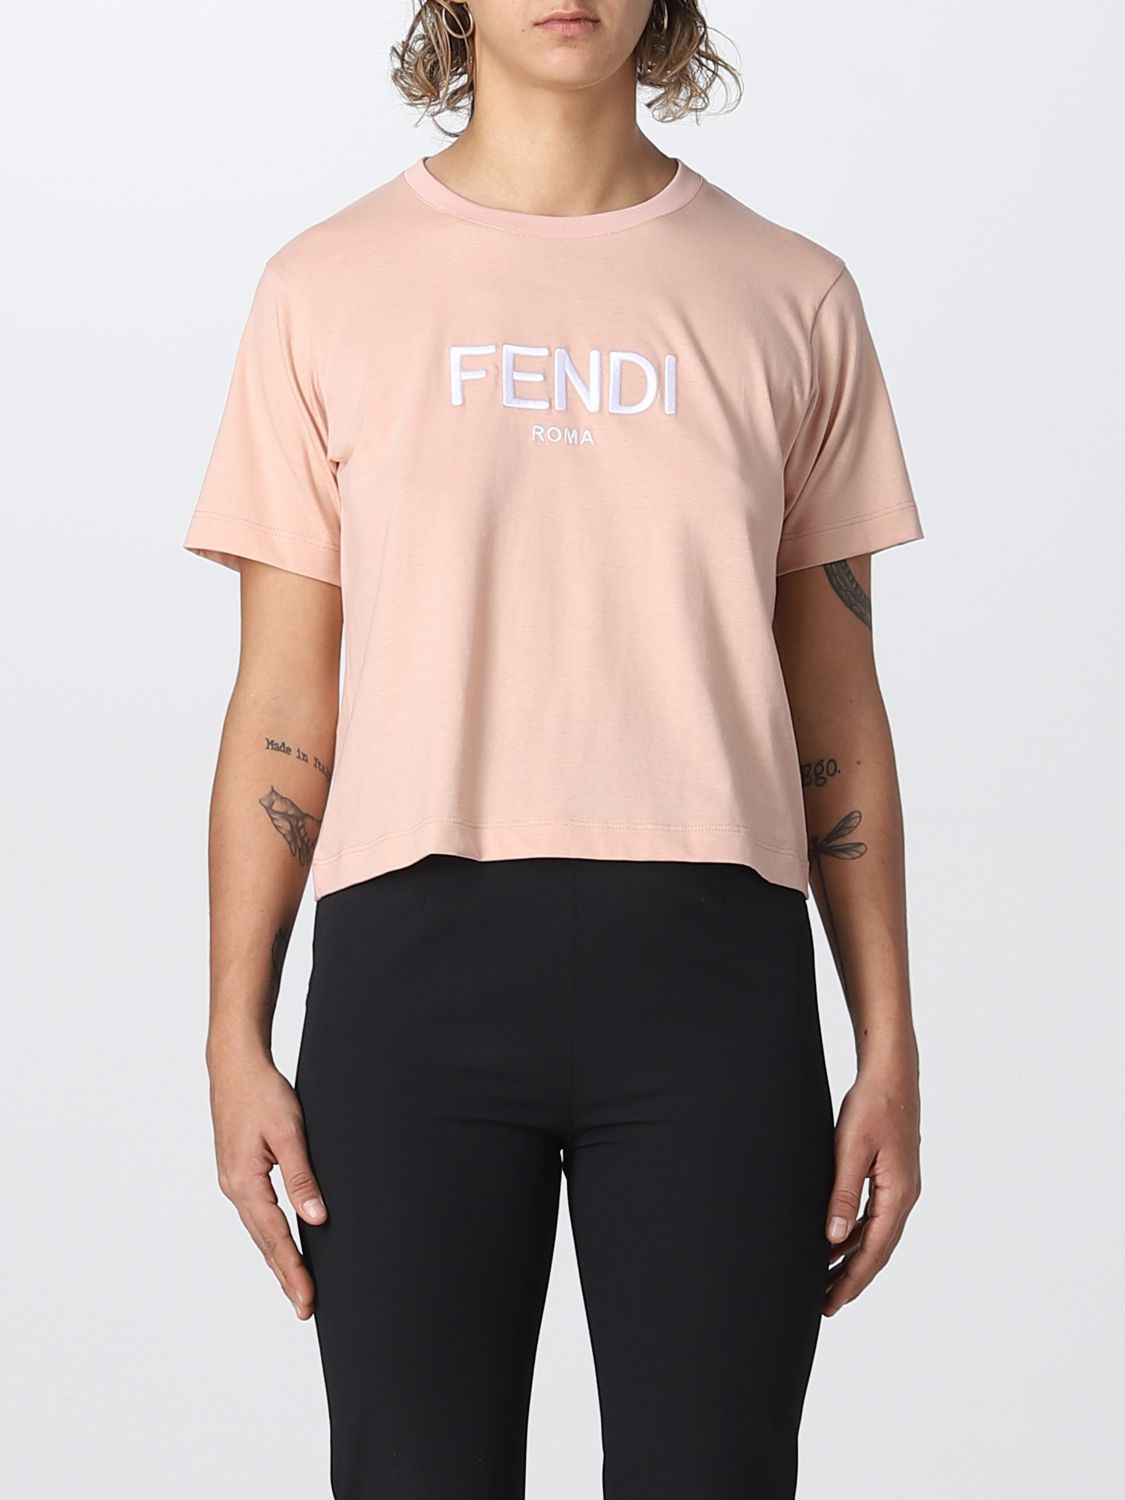 FENDI T-SHIRT FENDI WOMAN COLOR PINK,368638010